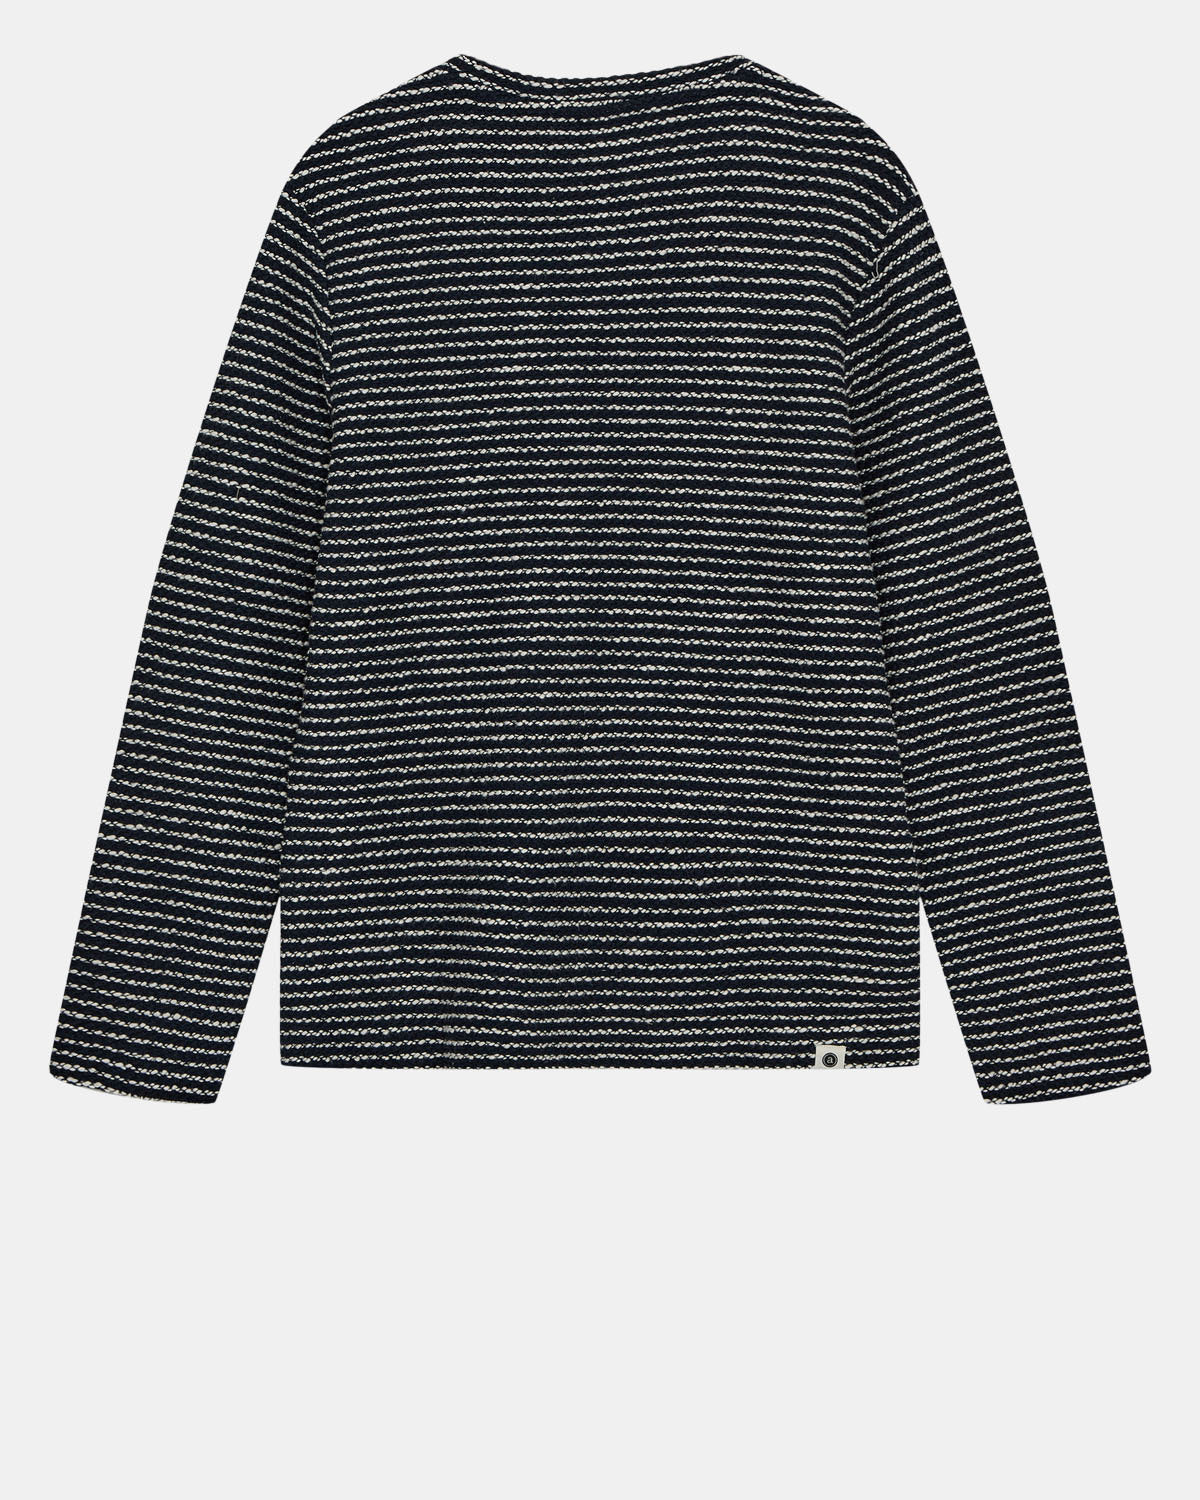 Sail stripe sweater sky captain - Anerkjendt